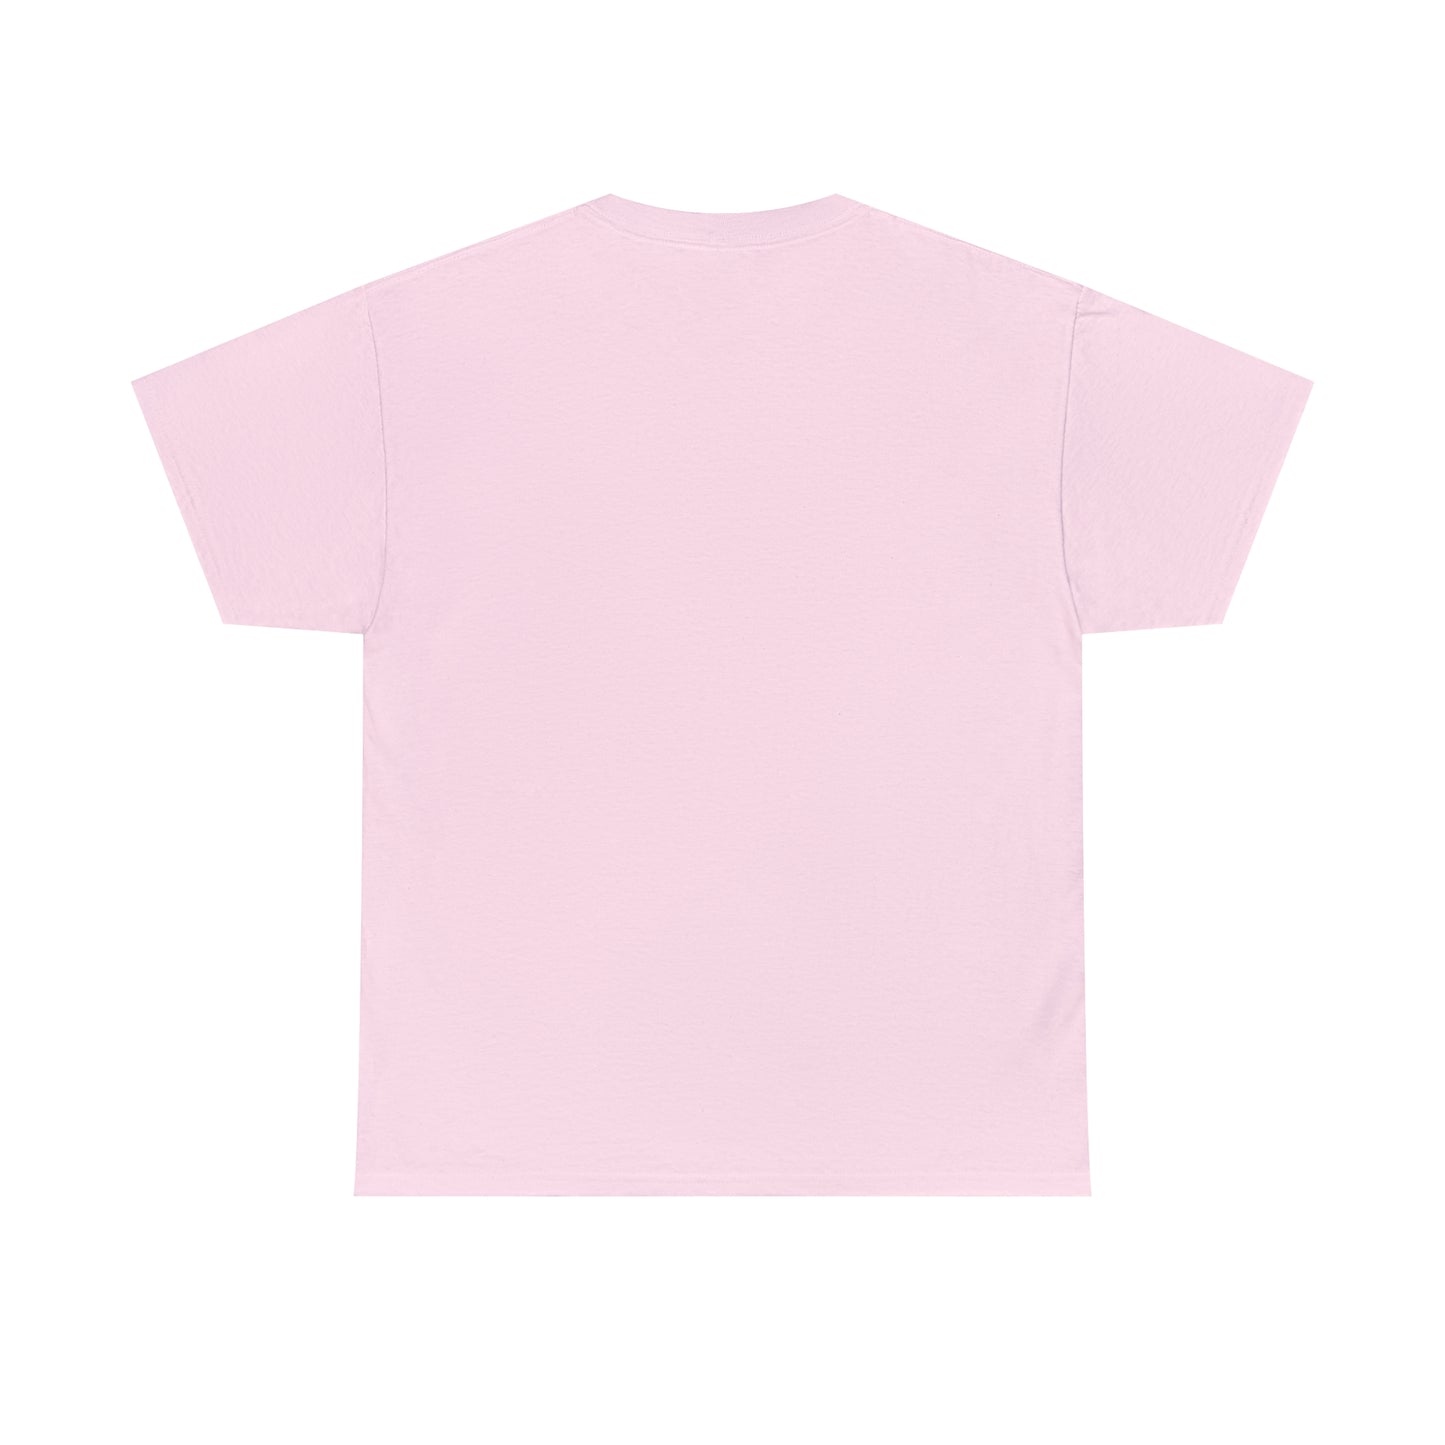 Pastel Playground - Hurts Shirts Collection